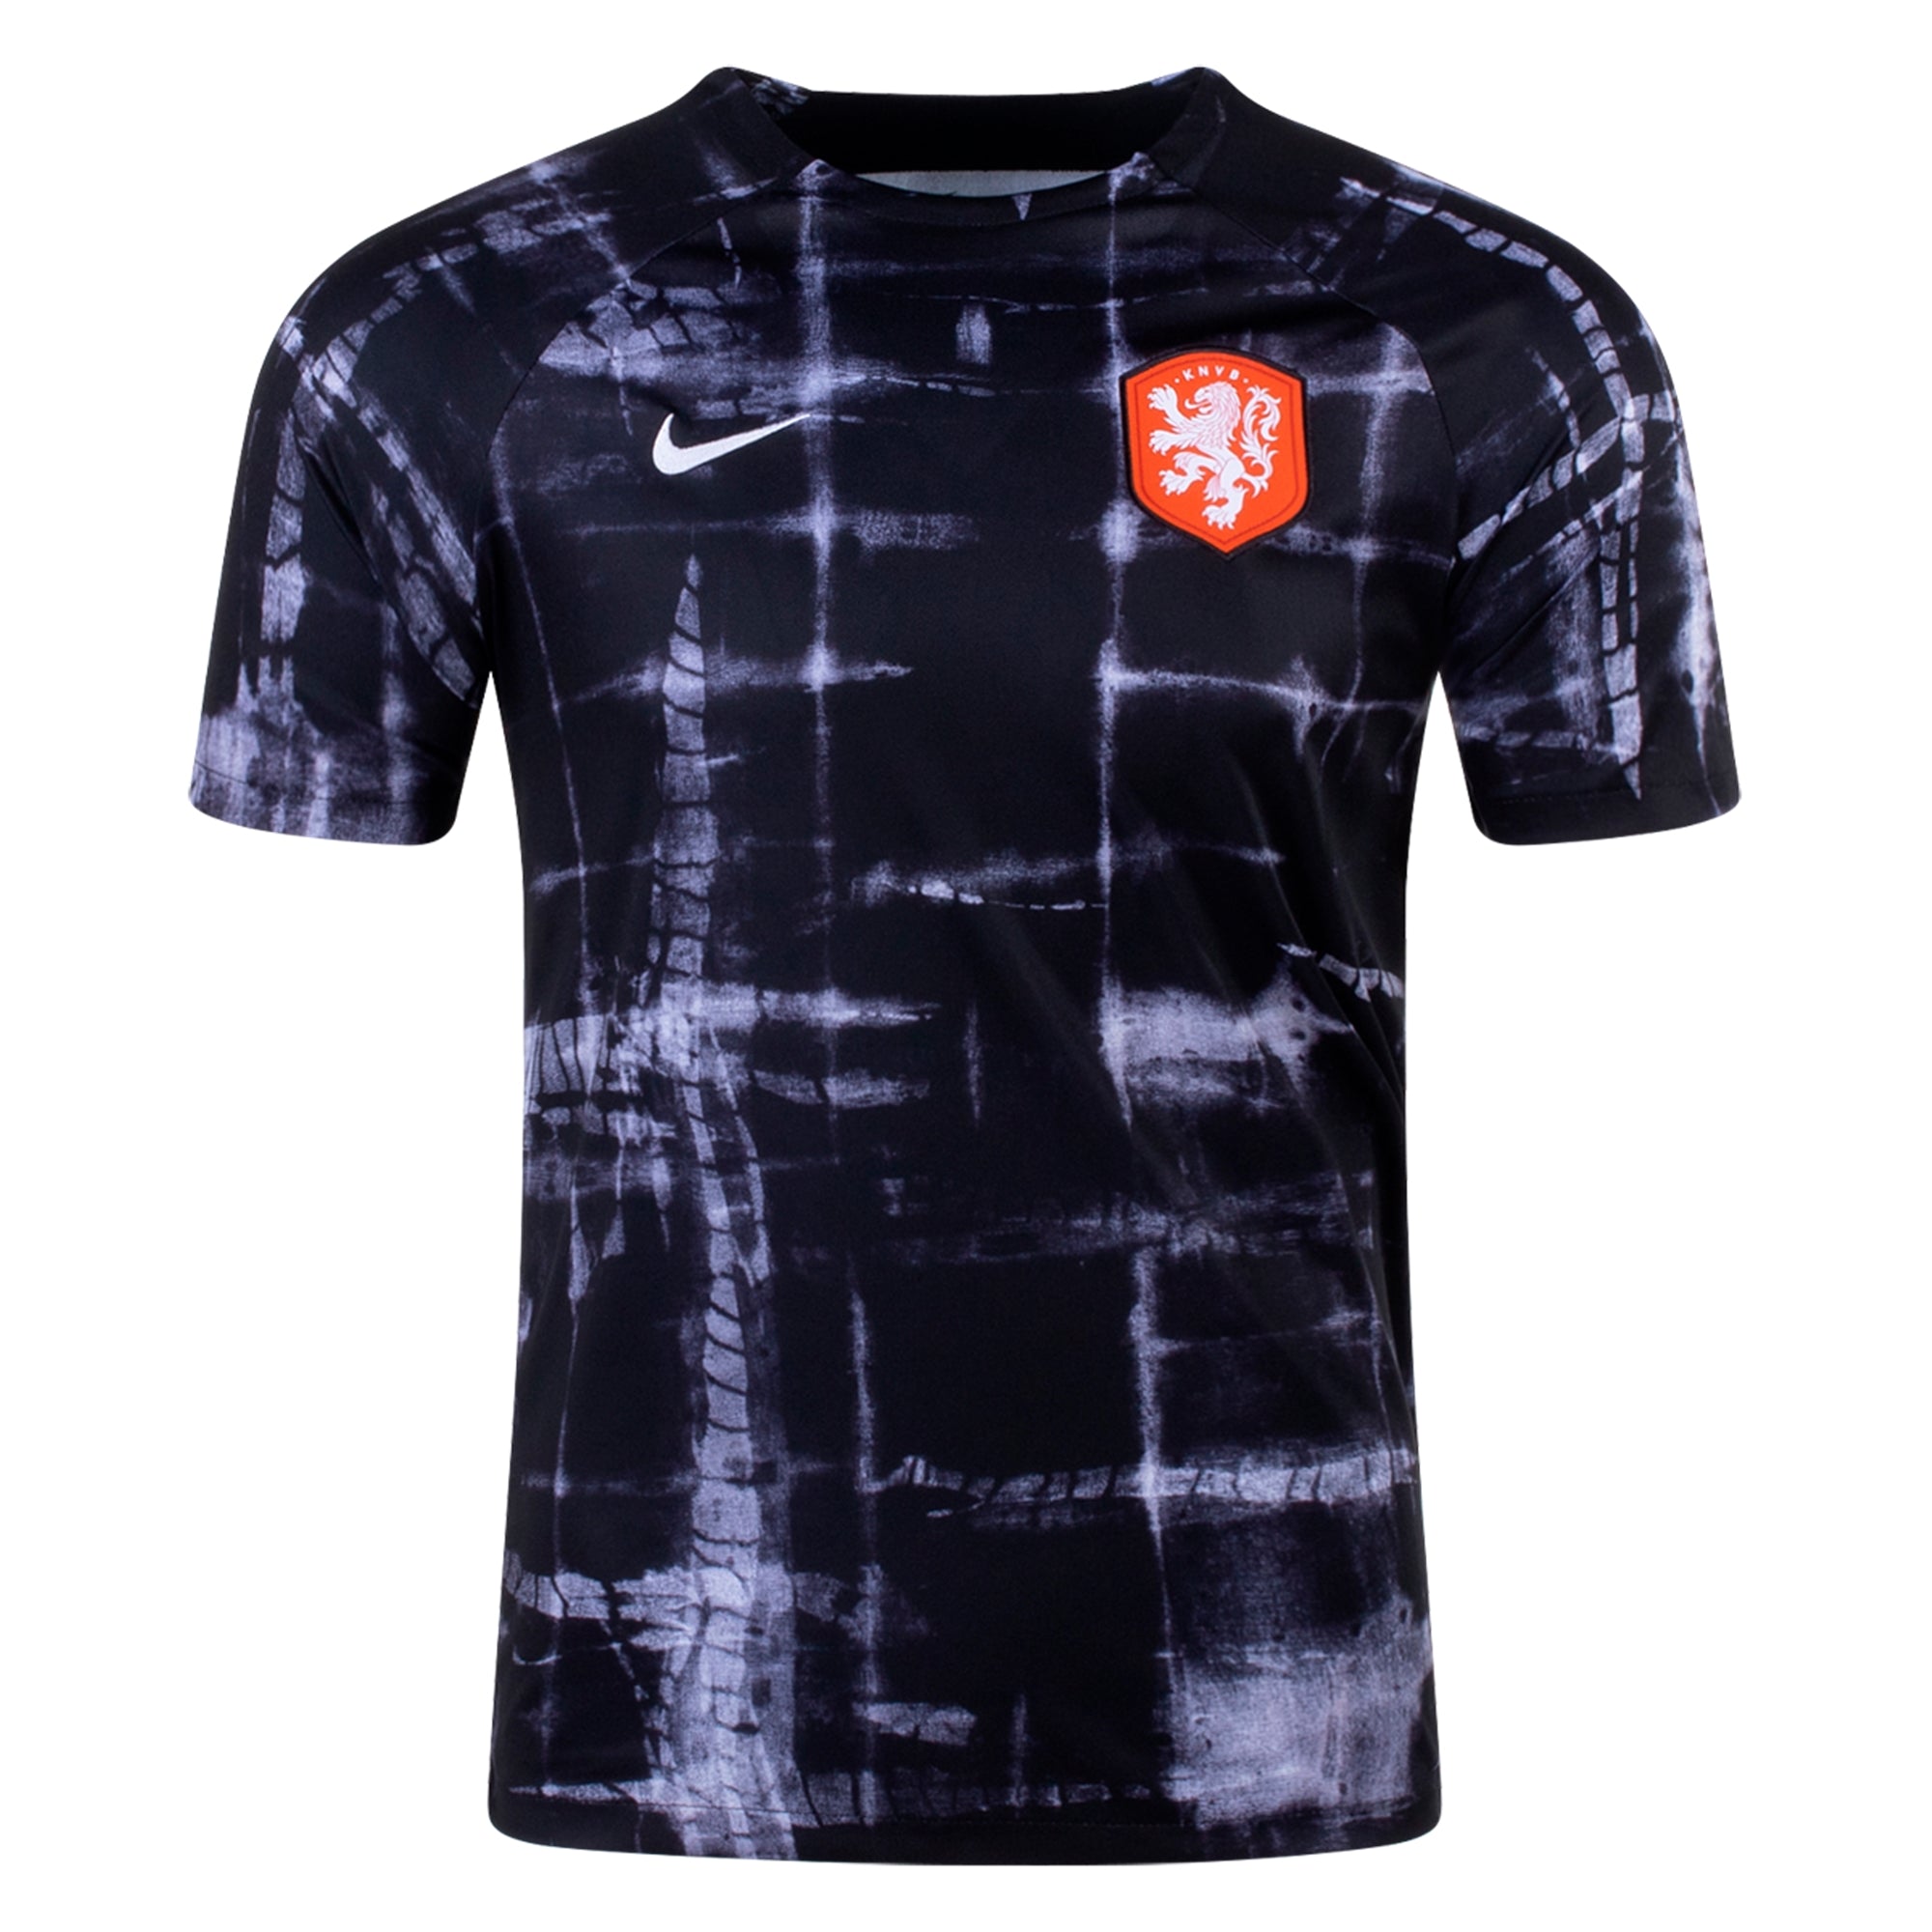 Netherlands Men's Nike Dri-FIT Pre-Match Soccer Top.